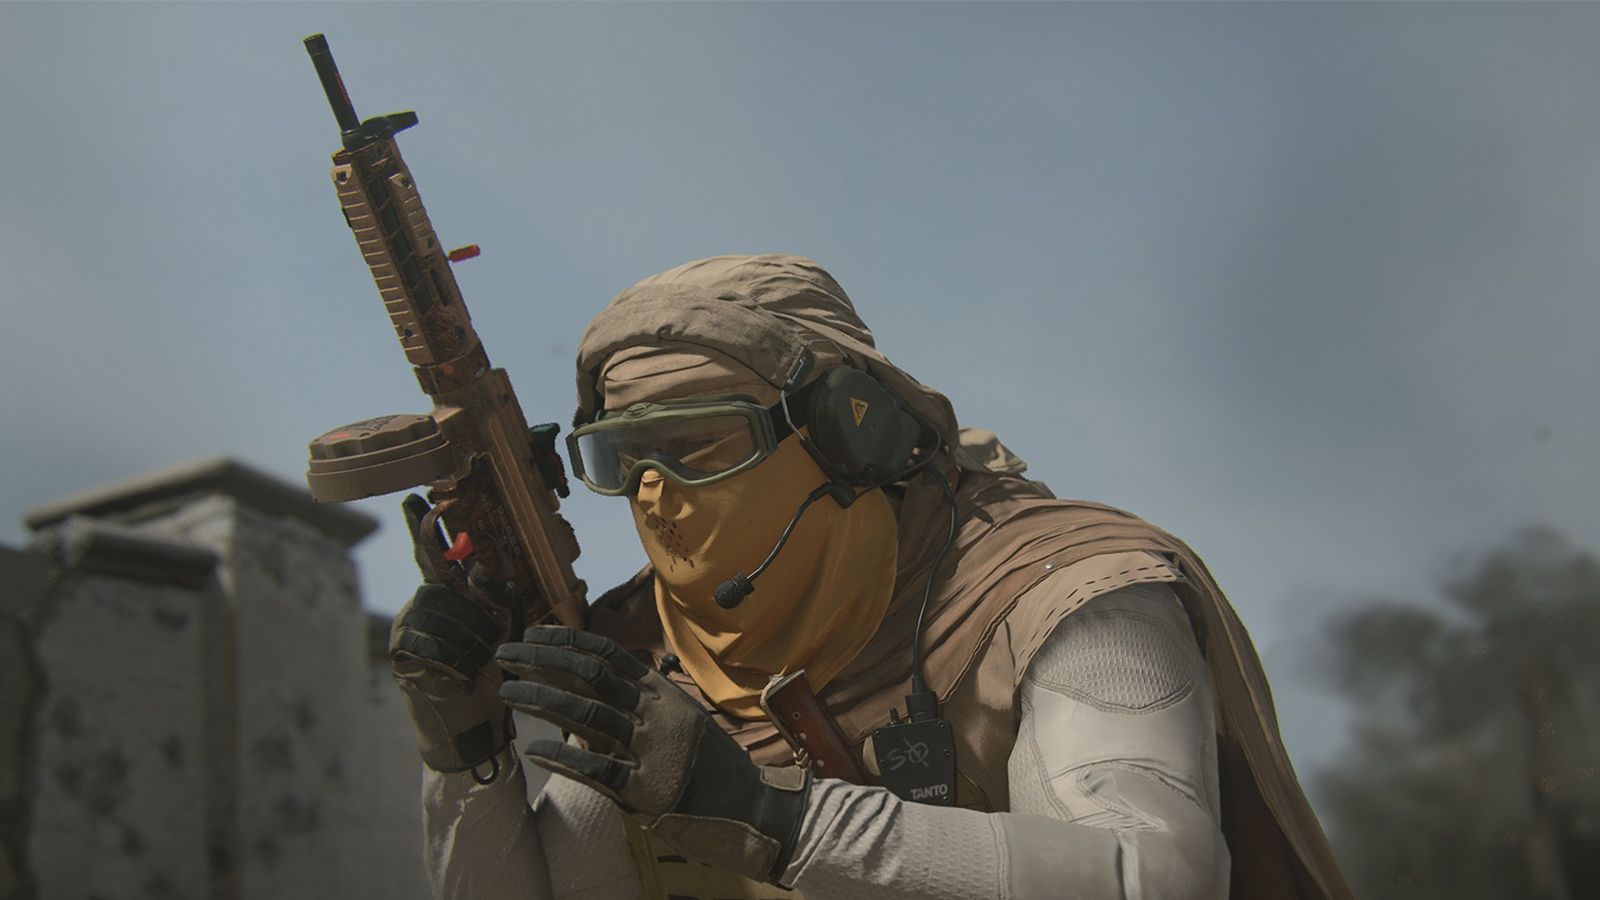 Warzone 2 player carrying gun near head